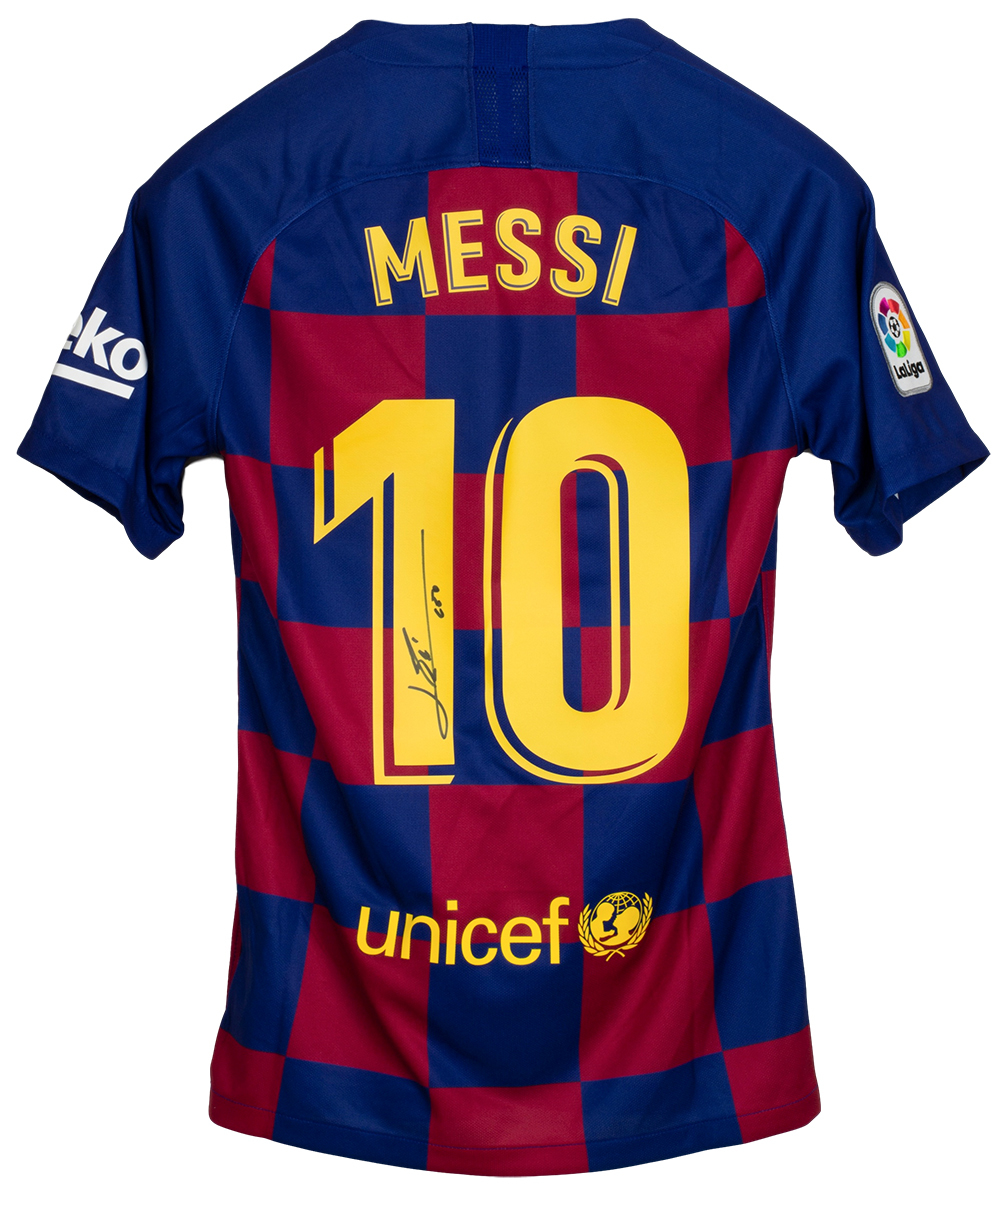 Lionel Messi Fc Barcelona Jersey - Lionel Messi Signed Barcelona Jersey